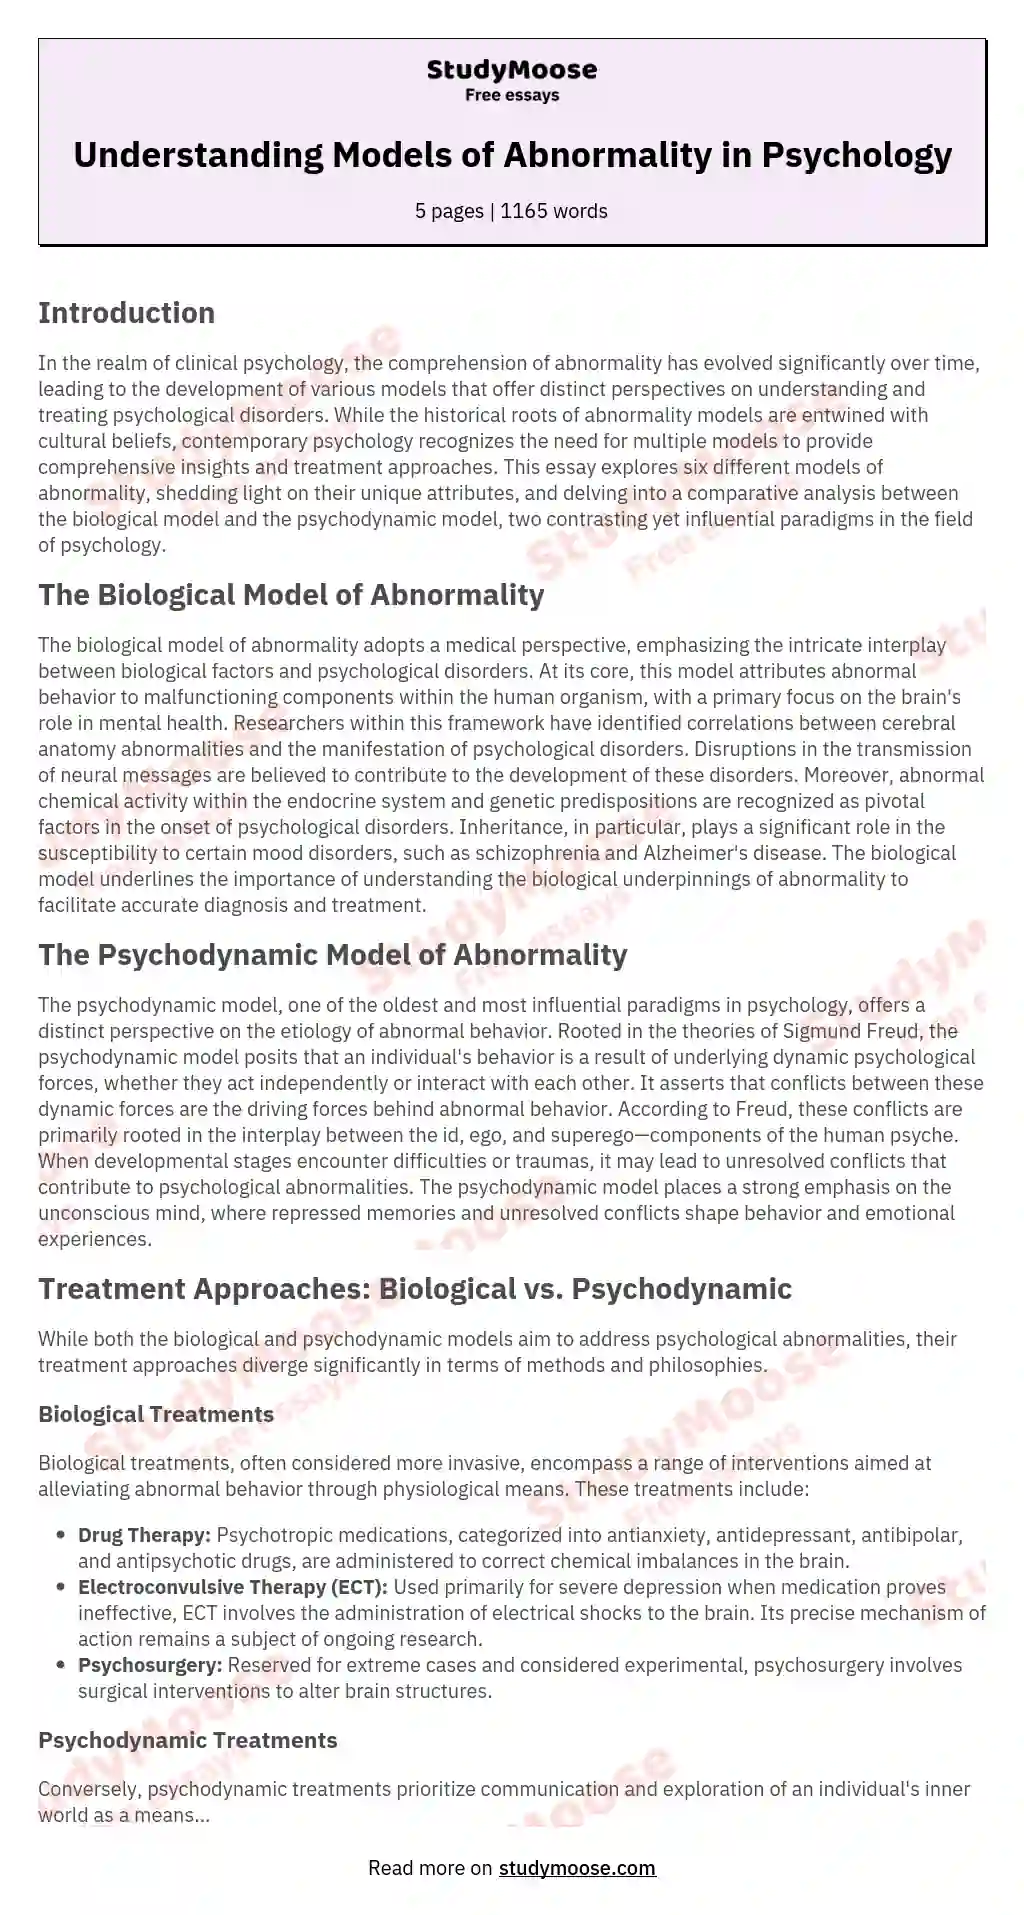 Understanding Models of Abnormality in Psychology essay